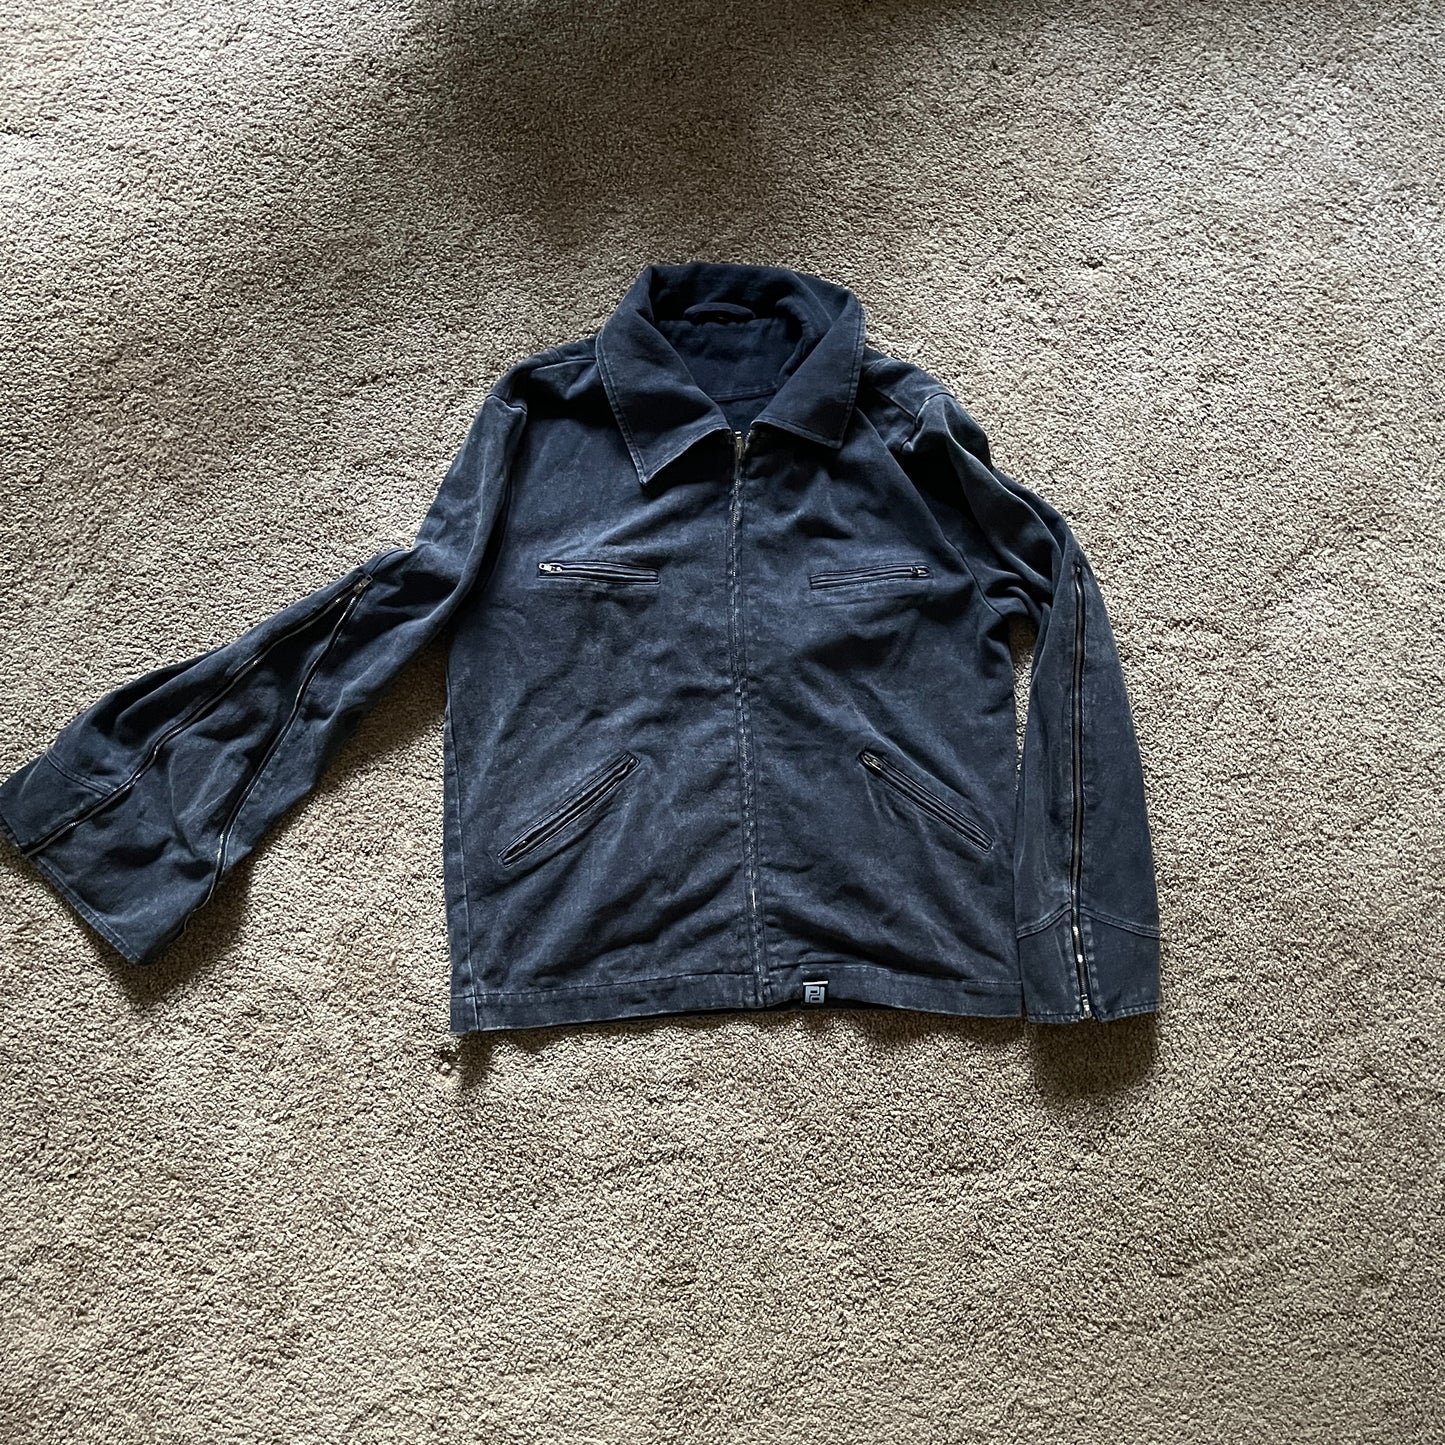 Flarez - Zip Flare Work Jacket with Adjustable Sleeves PRE ORDER